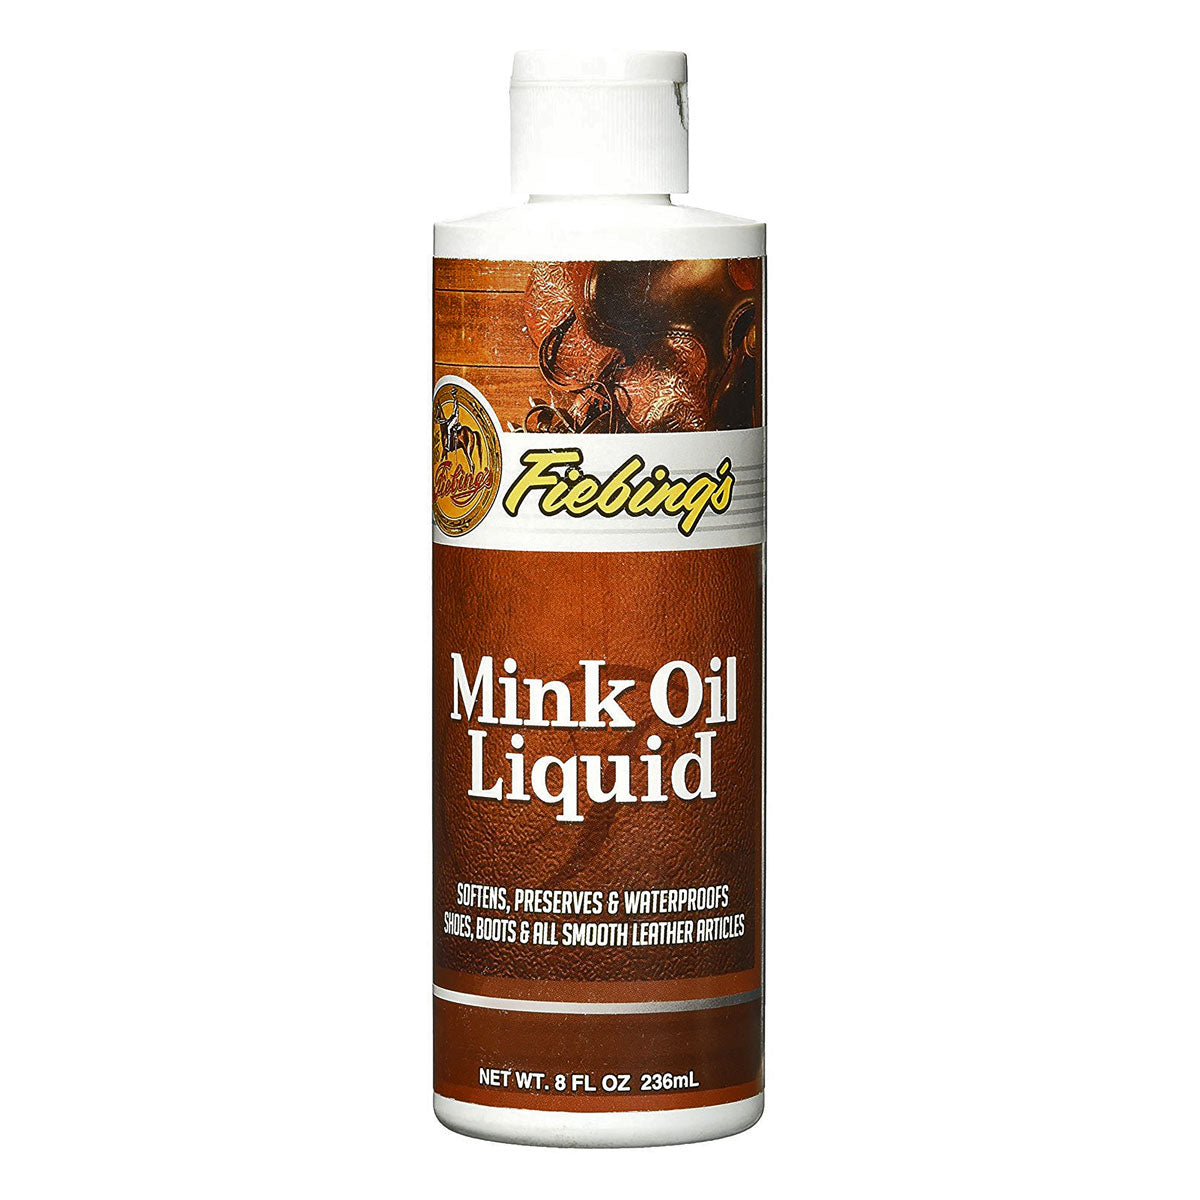 Mink Oil Liquid